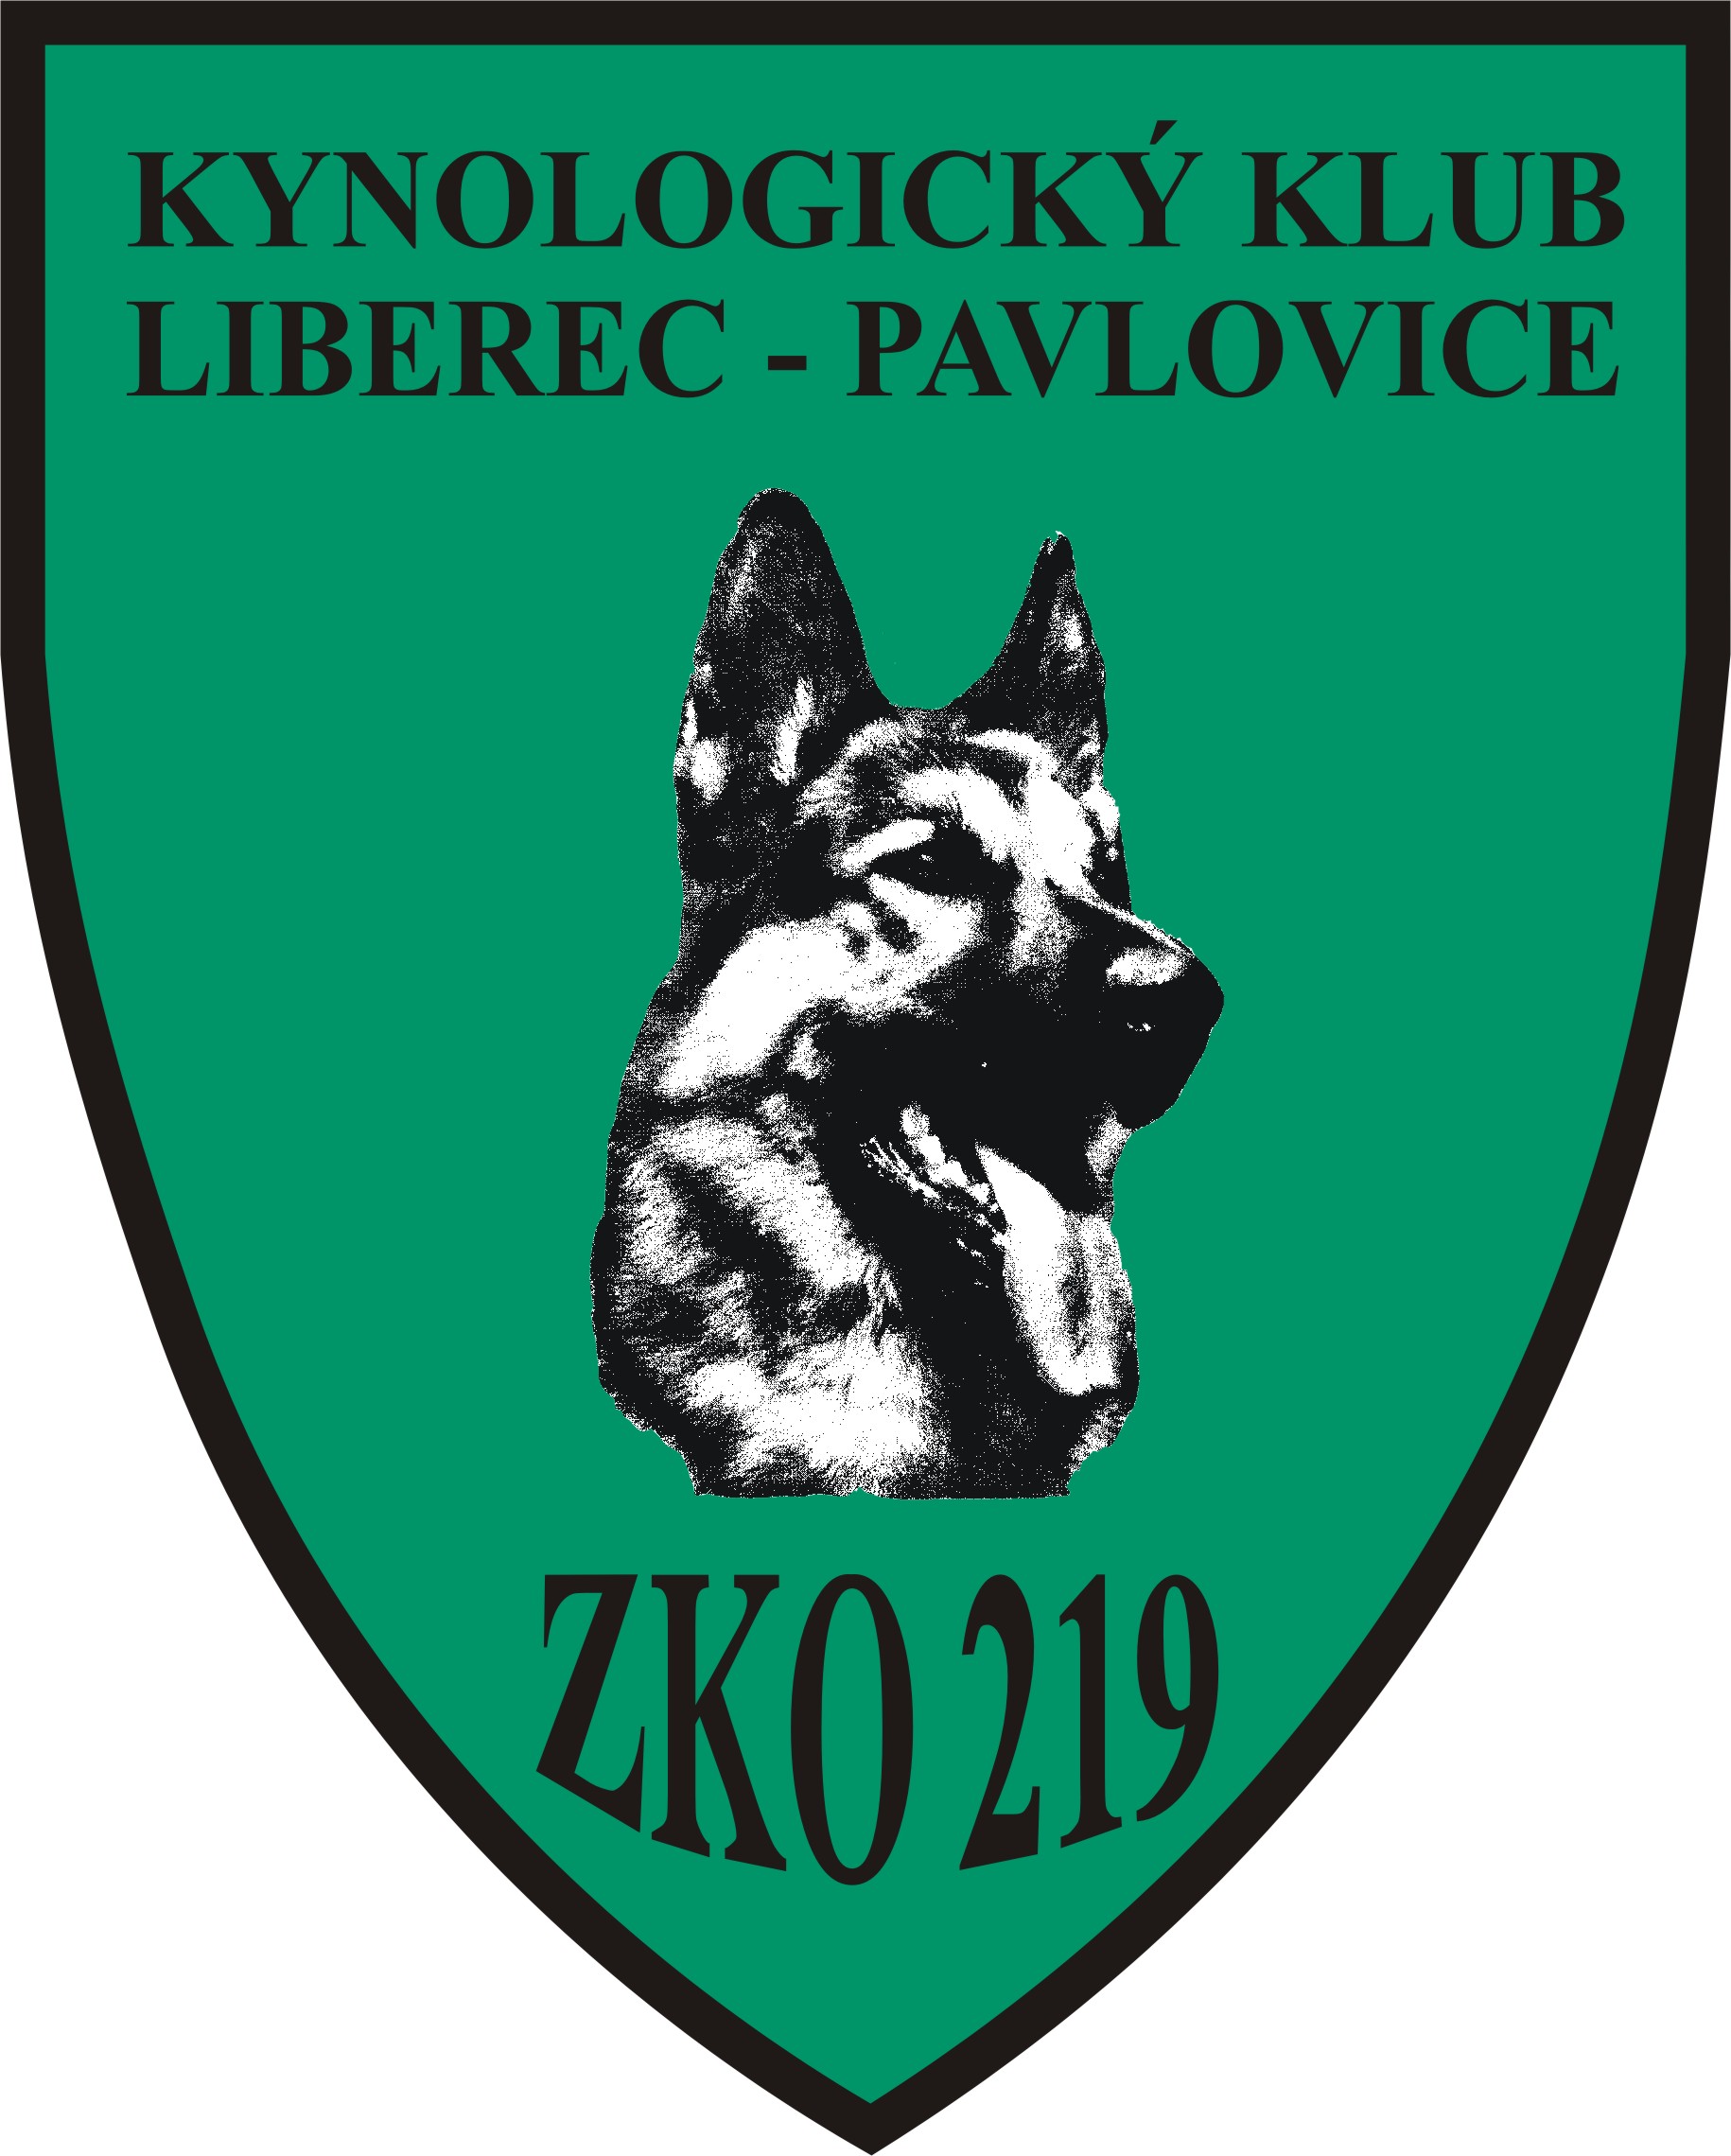 Kynologický klub Liberec - Pavlovice